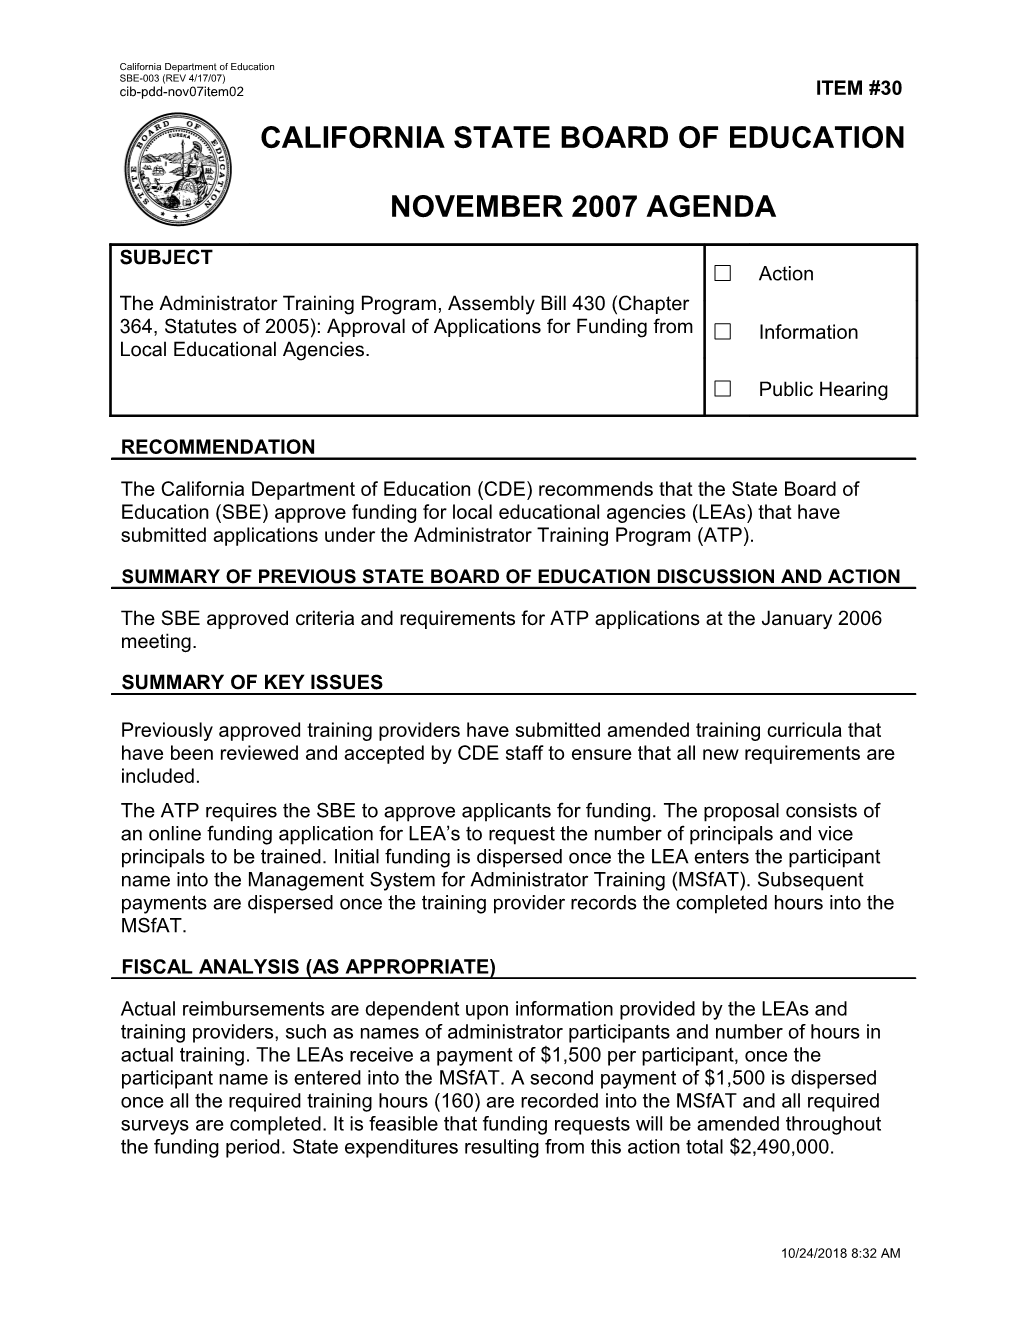 November 2007 Agenda Item 30 - Meeting Agendas (CA State Board of Education)